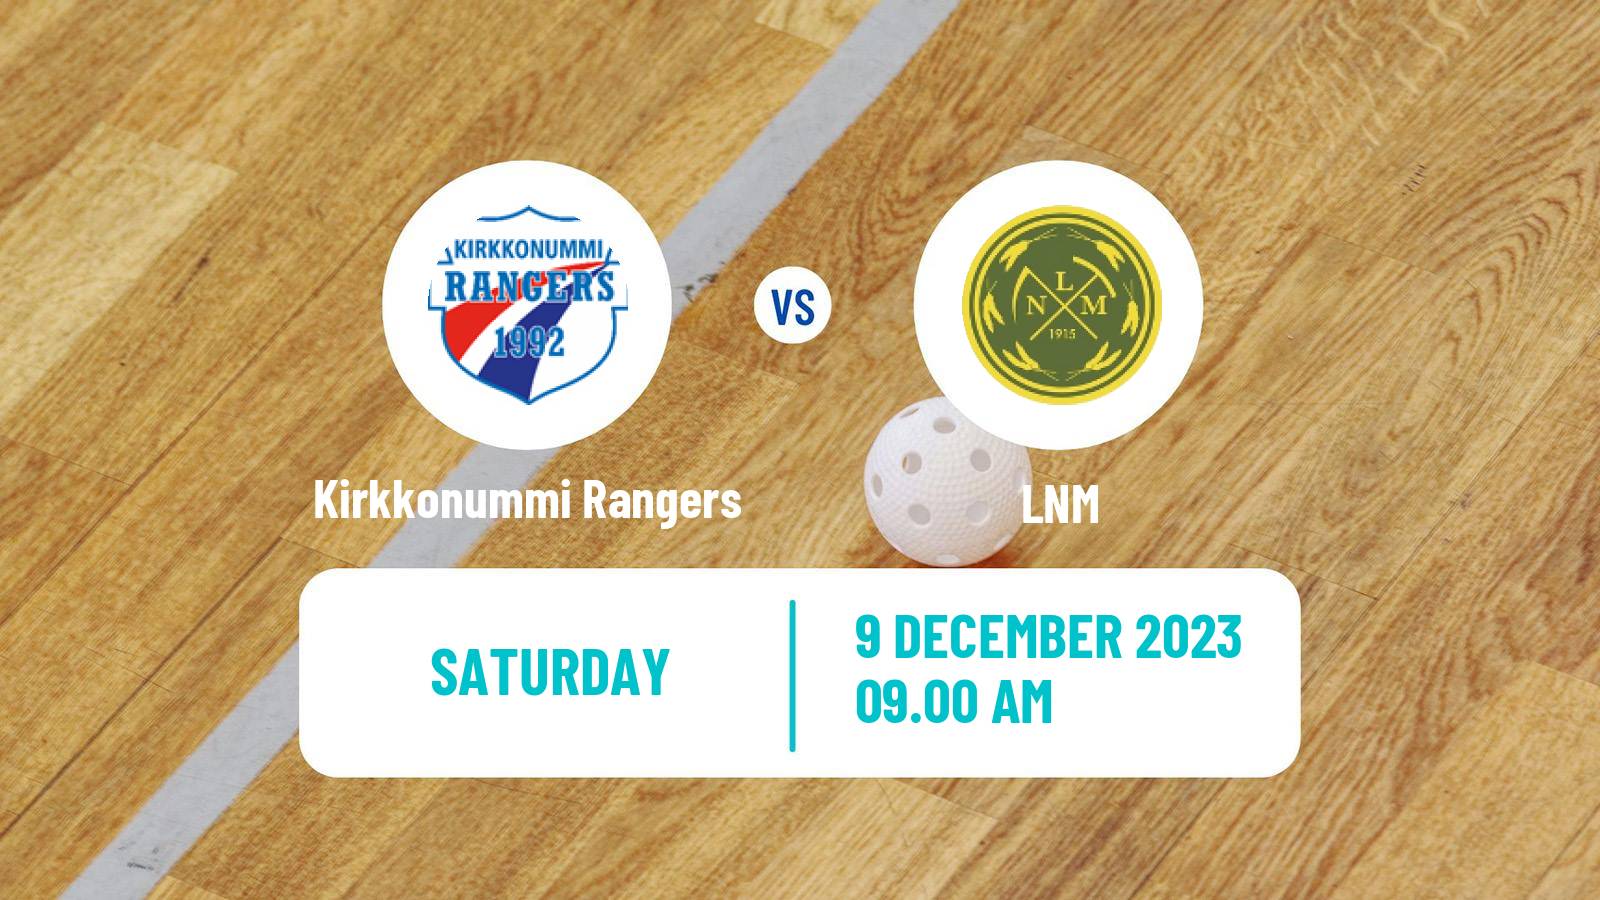 Floorball Finnish Divari Kirkkonummi Rangers - LNM